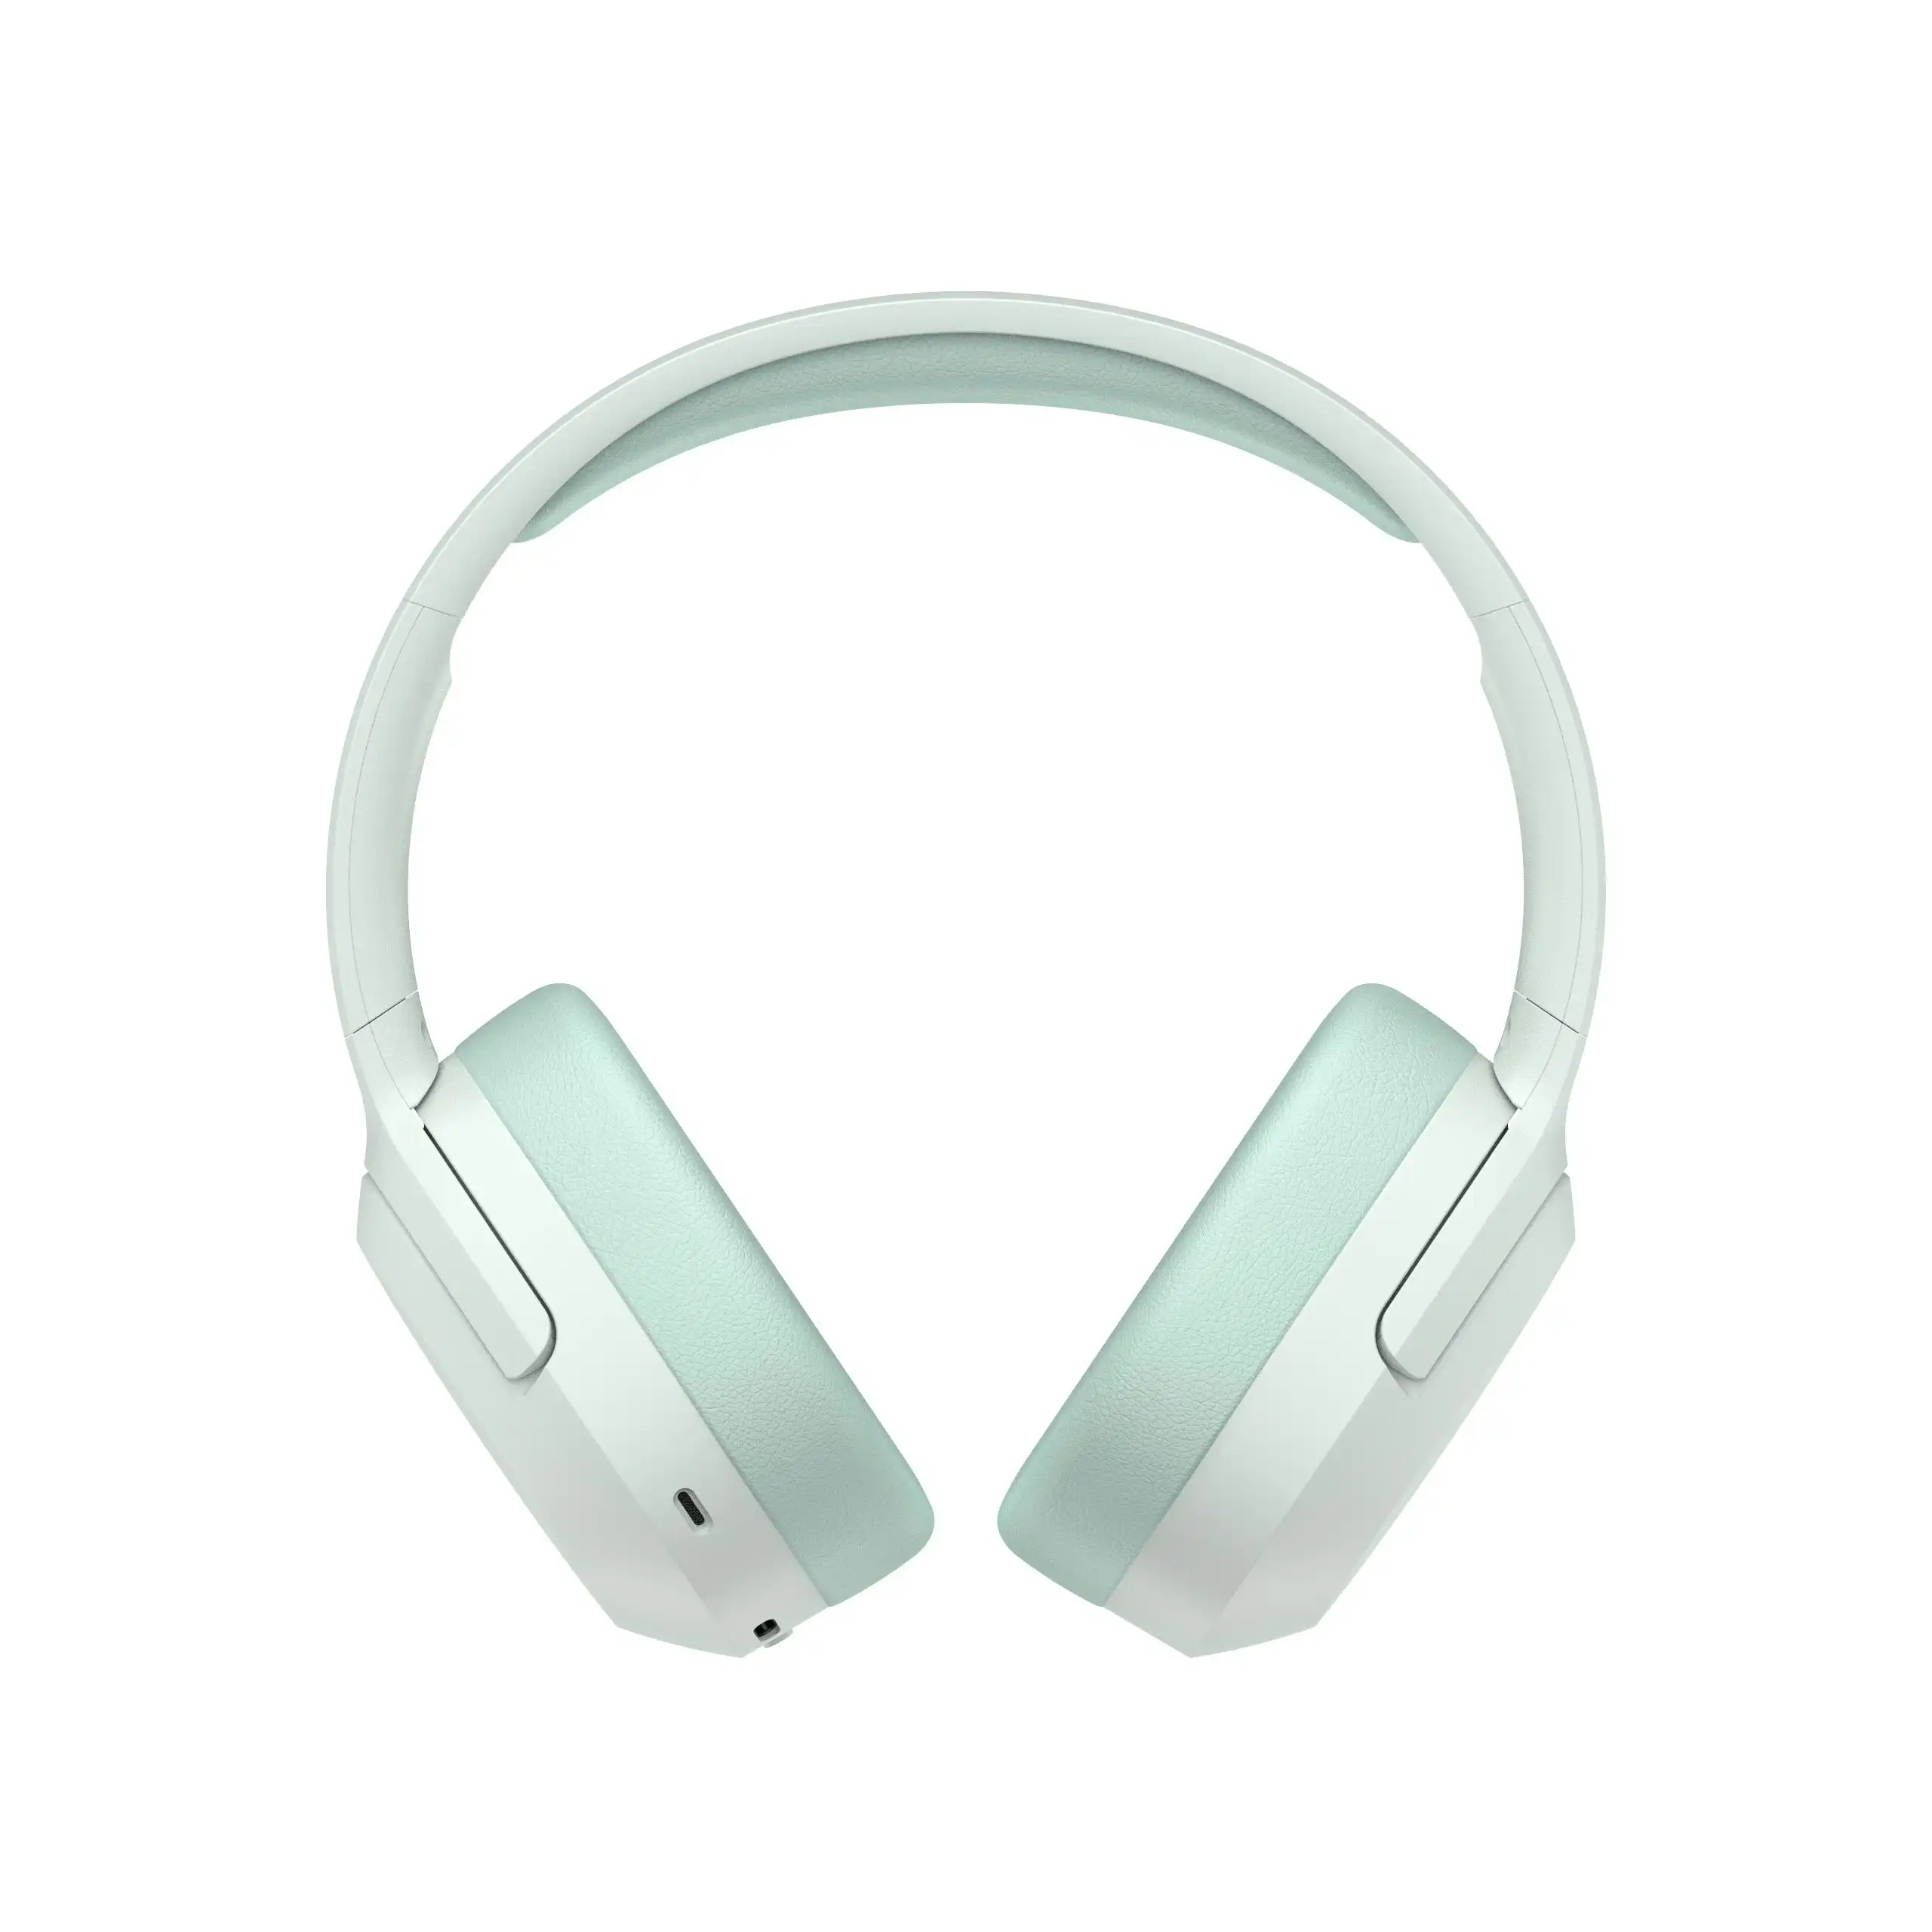 Edifier W820nb Plus Anc Wireless Stereo Headphone - Green